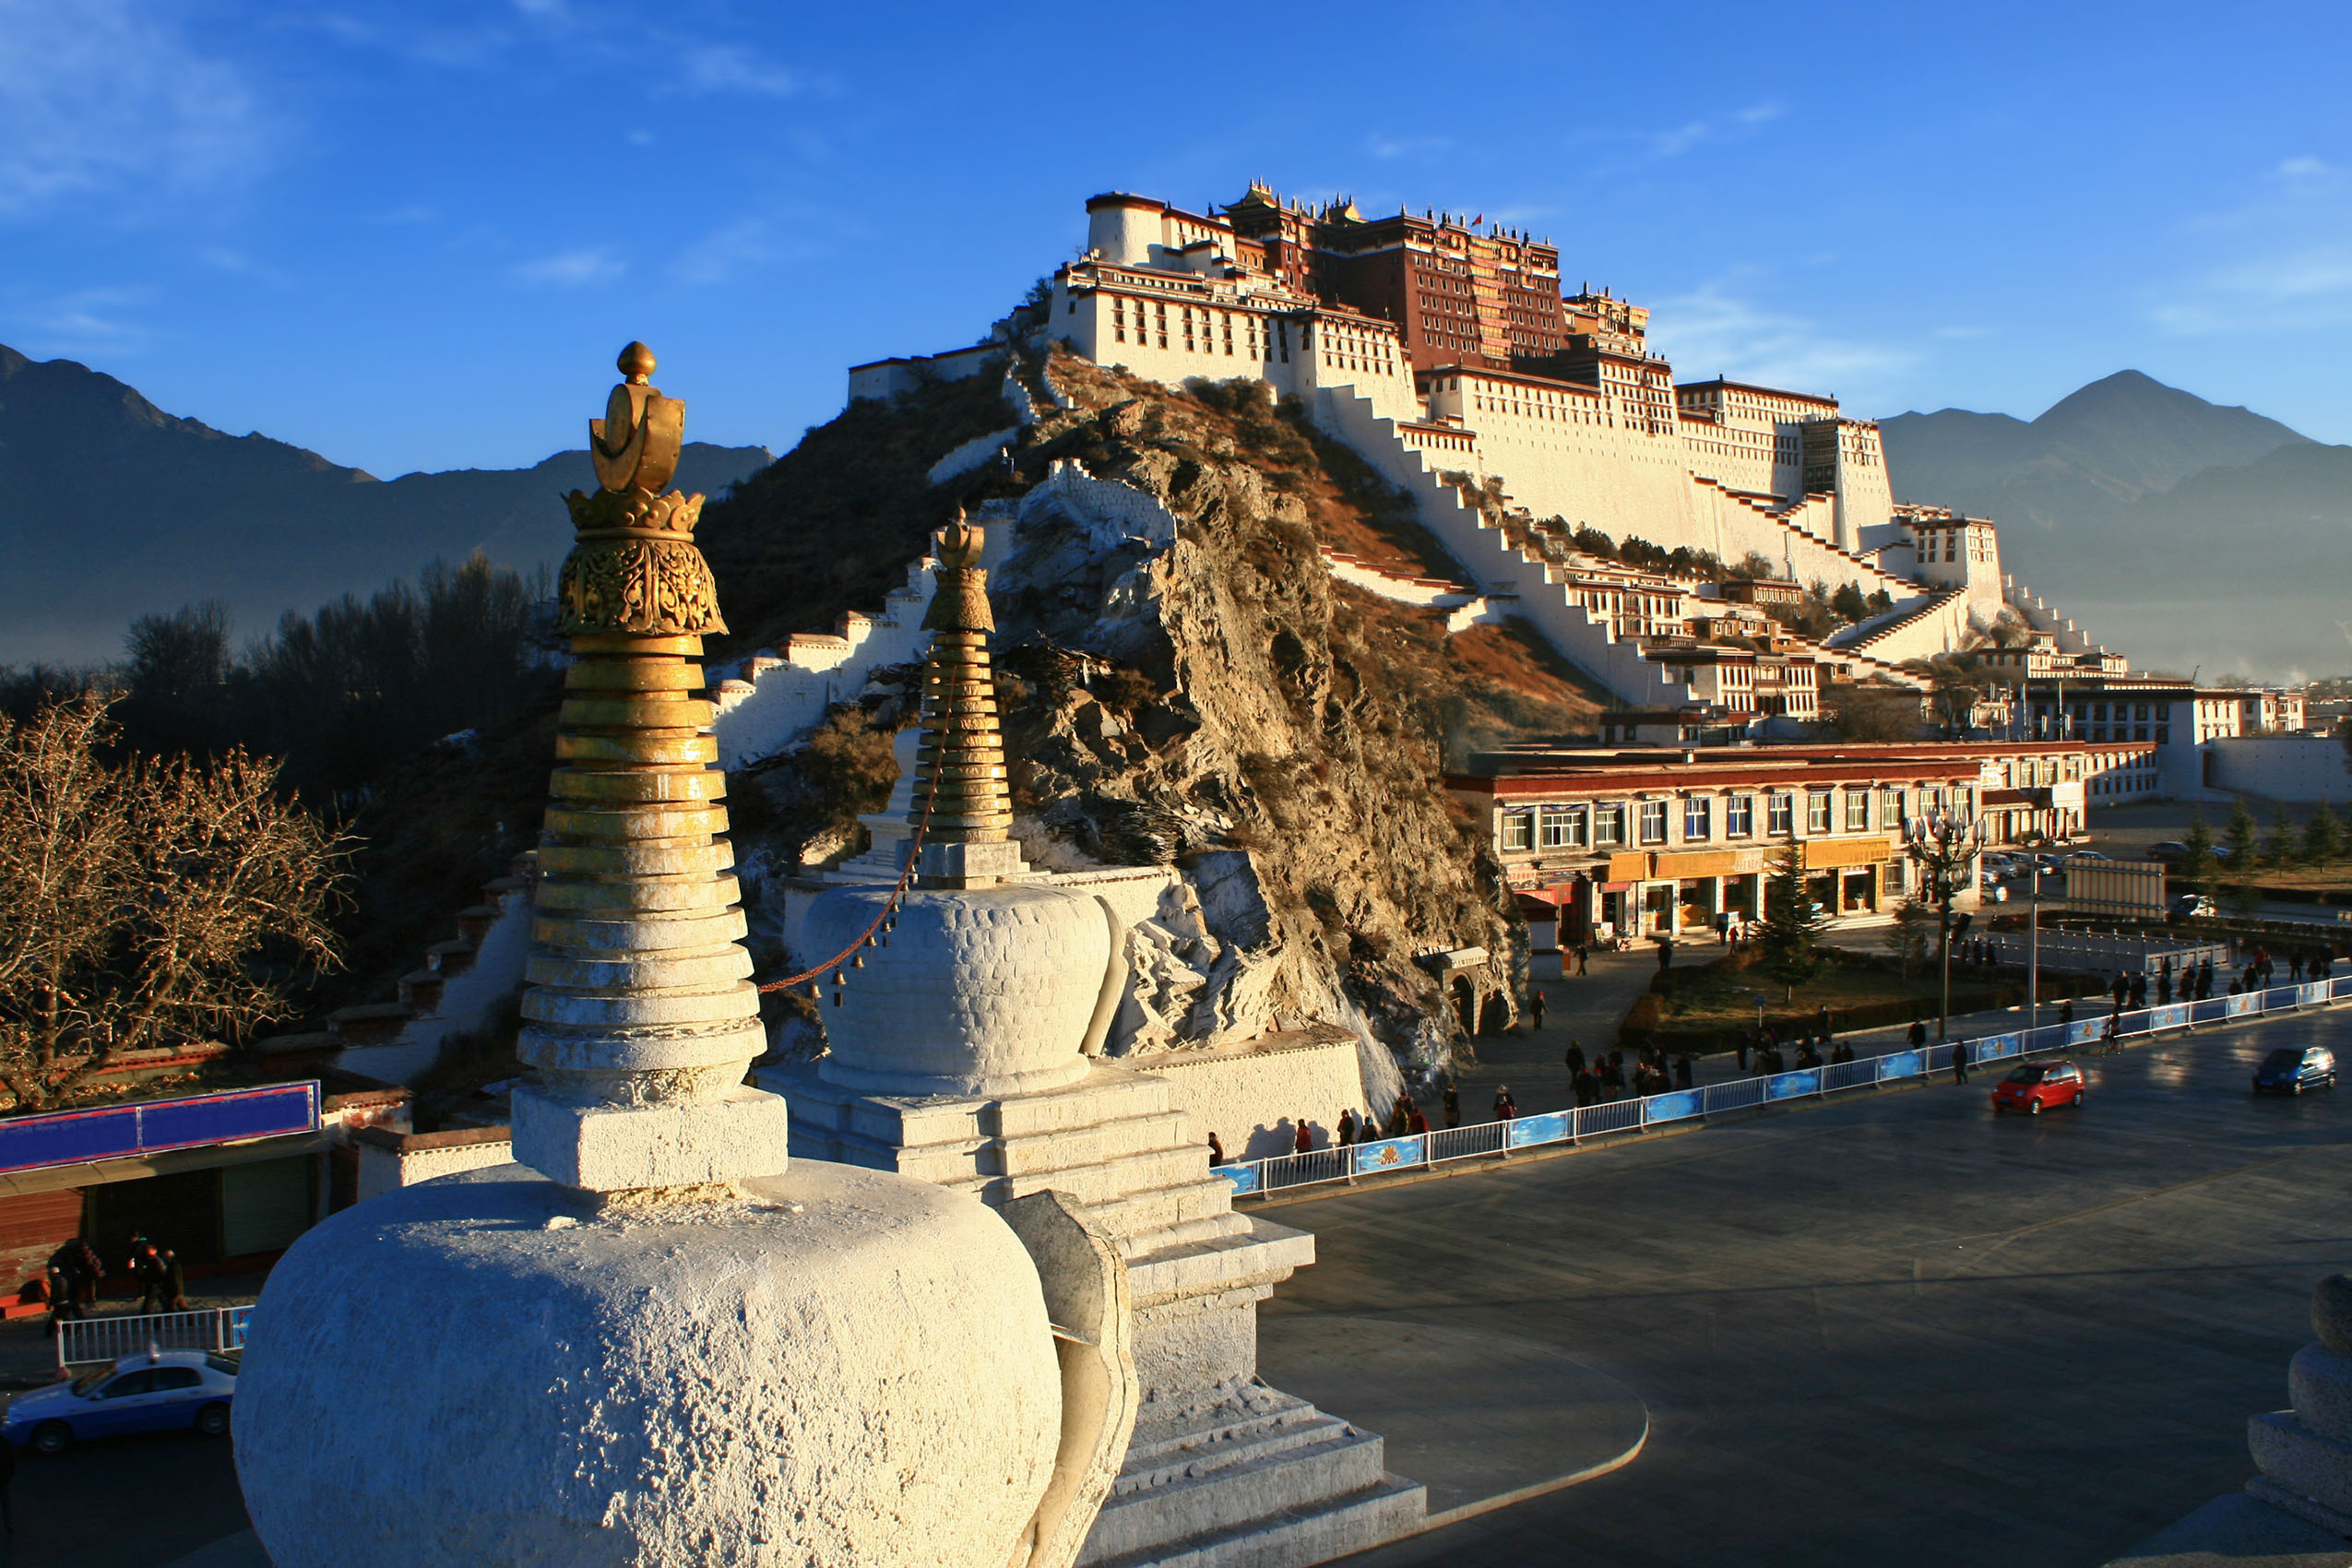 Lhasa, Tibet